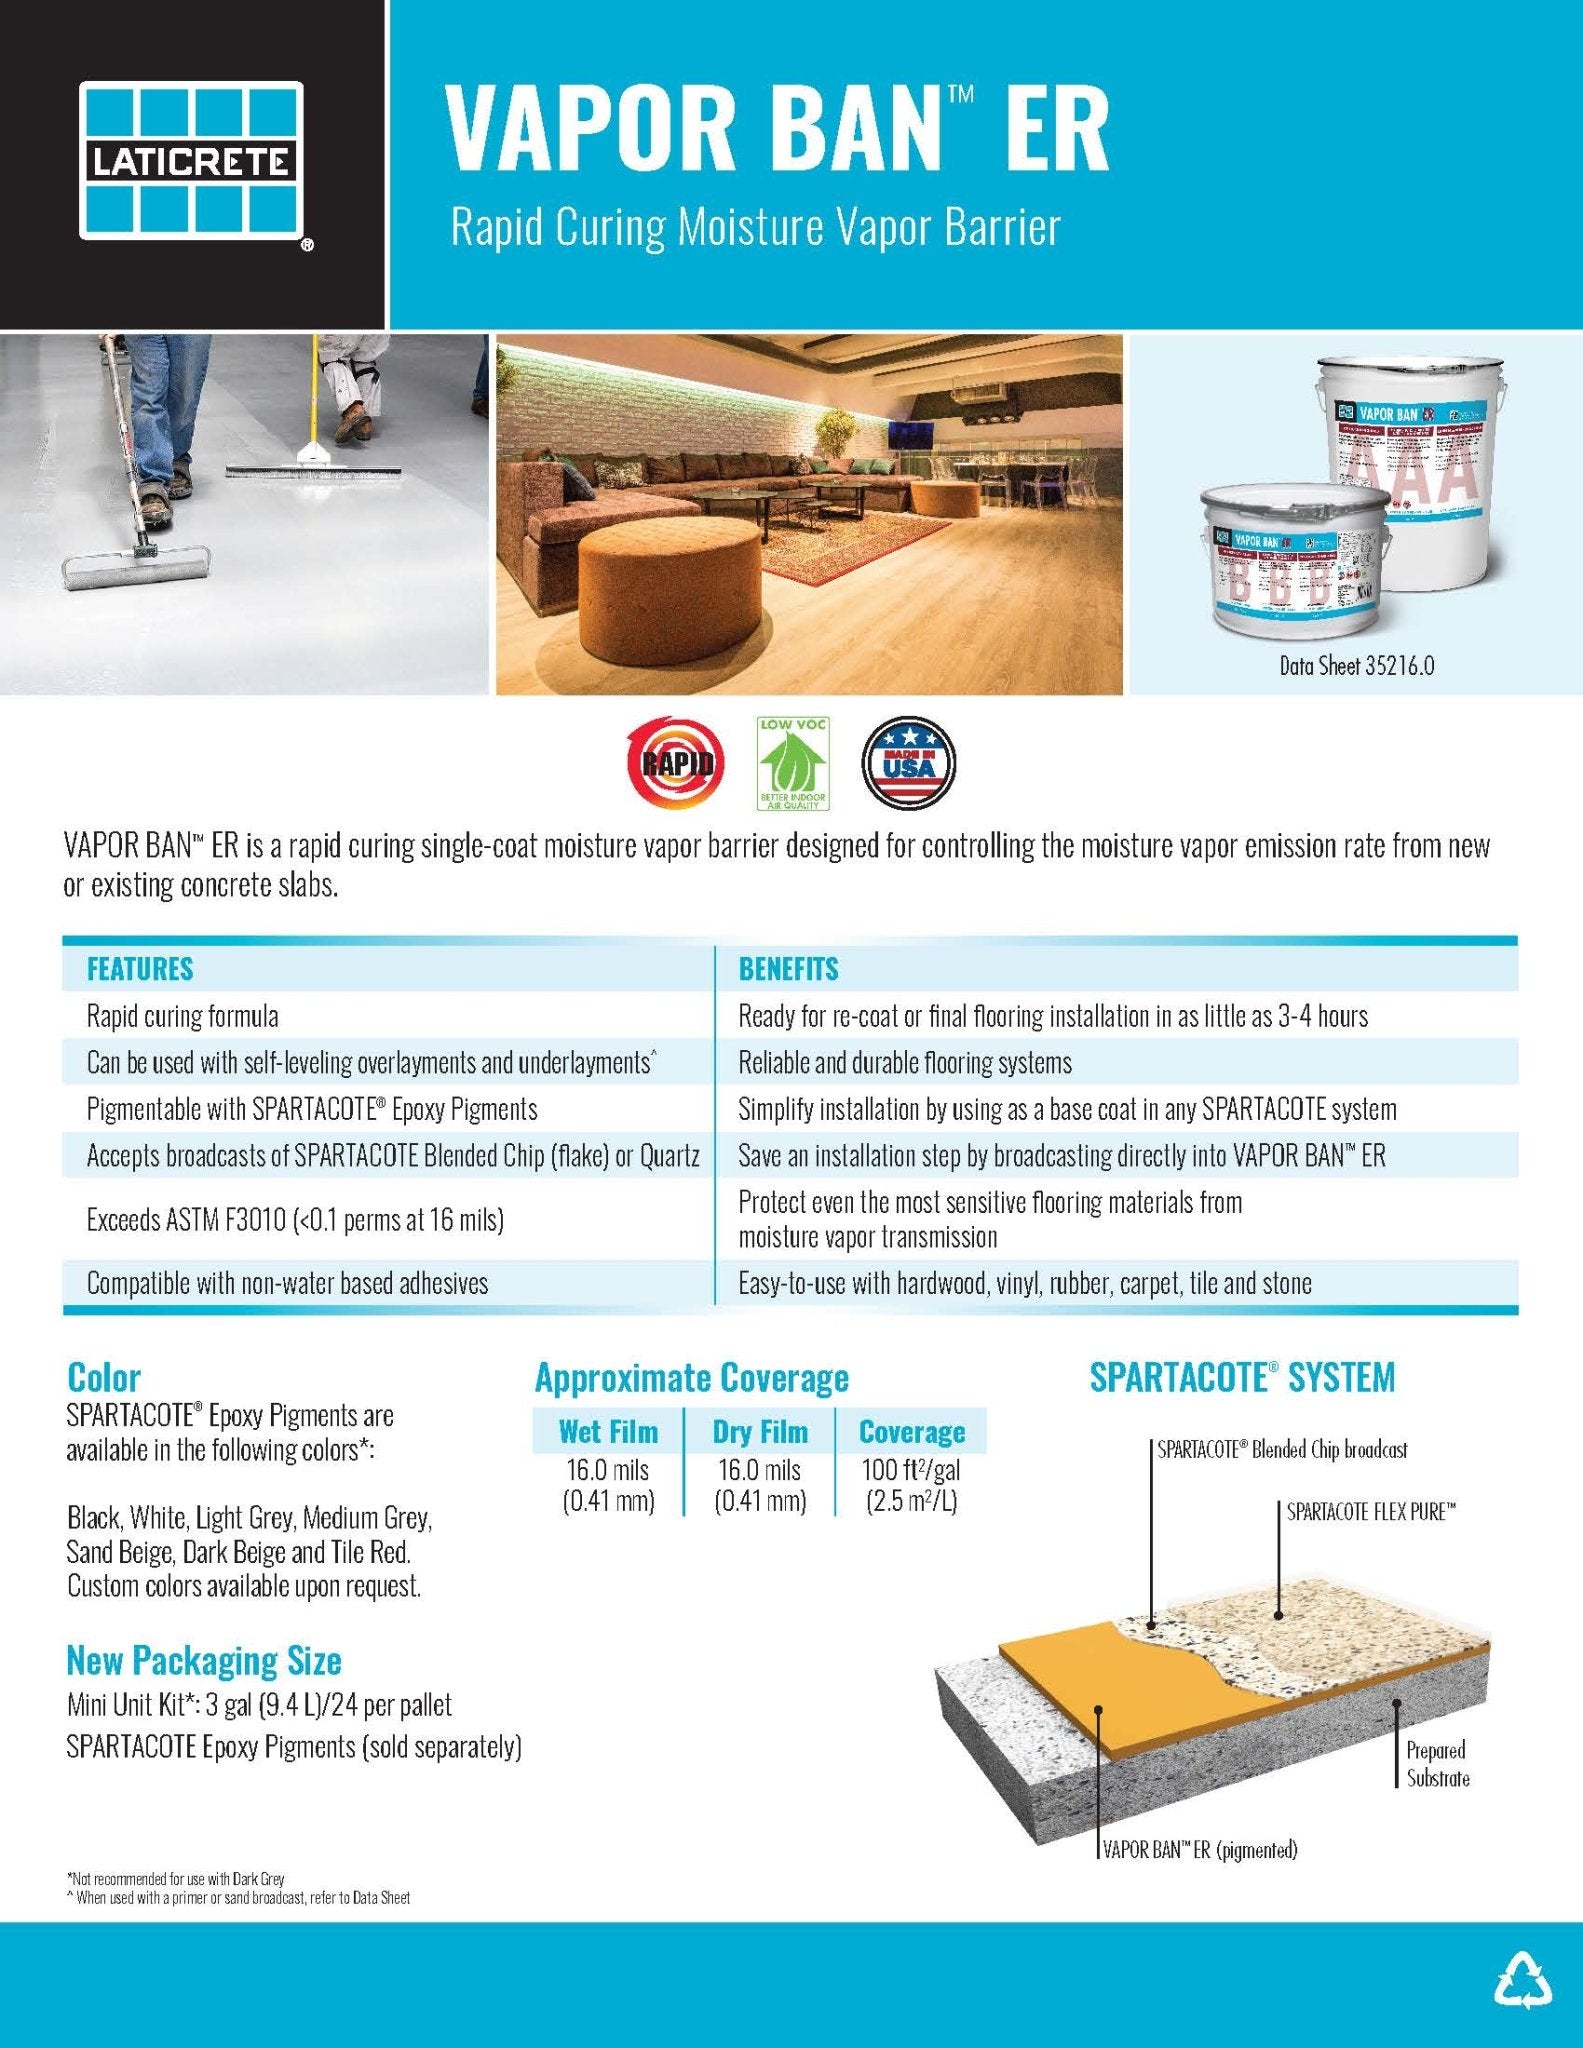 VAPORBAN ER Rapid Cure - Xtreme Polishing Systems: spartacote moisture vapor barrier.